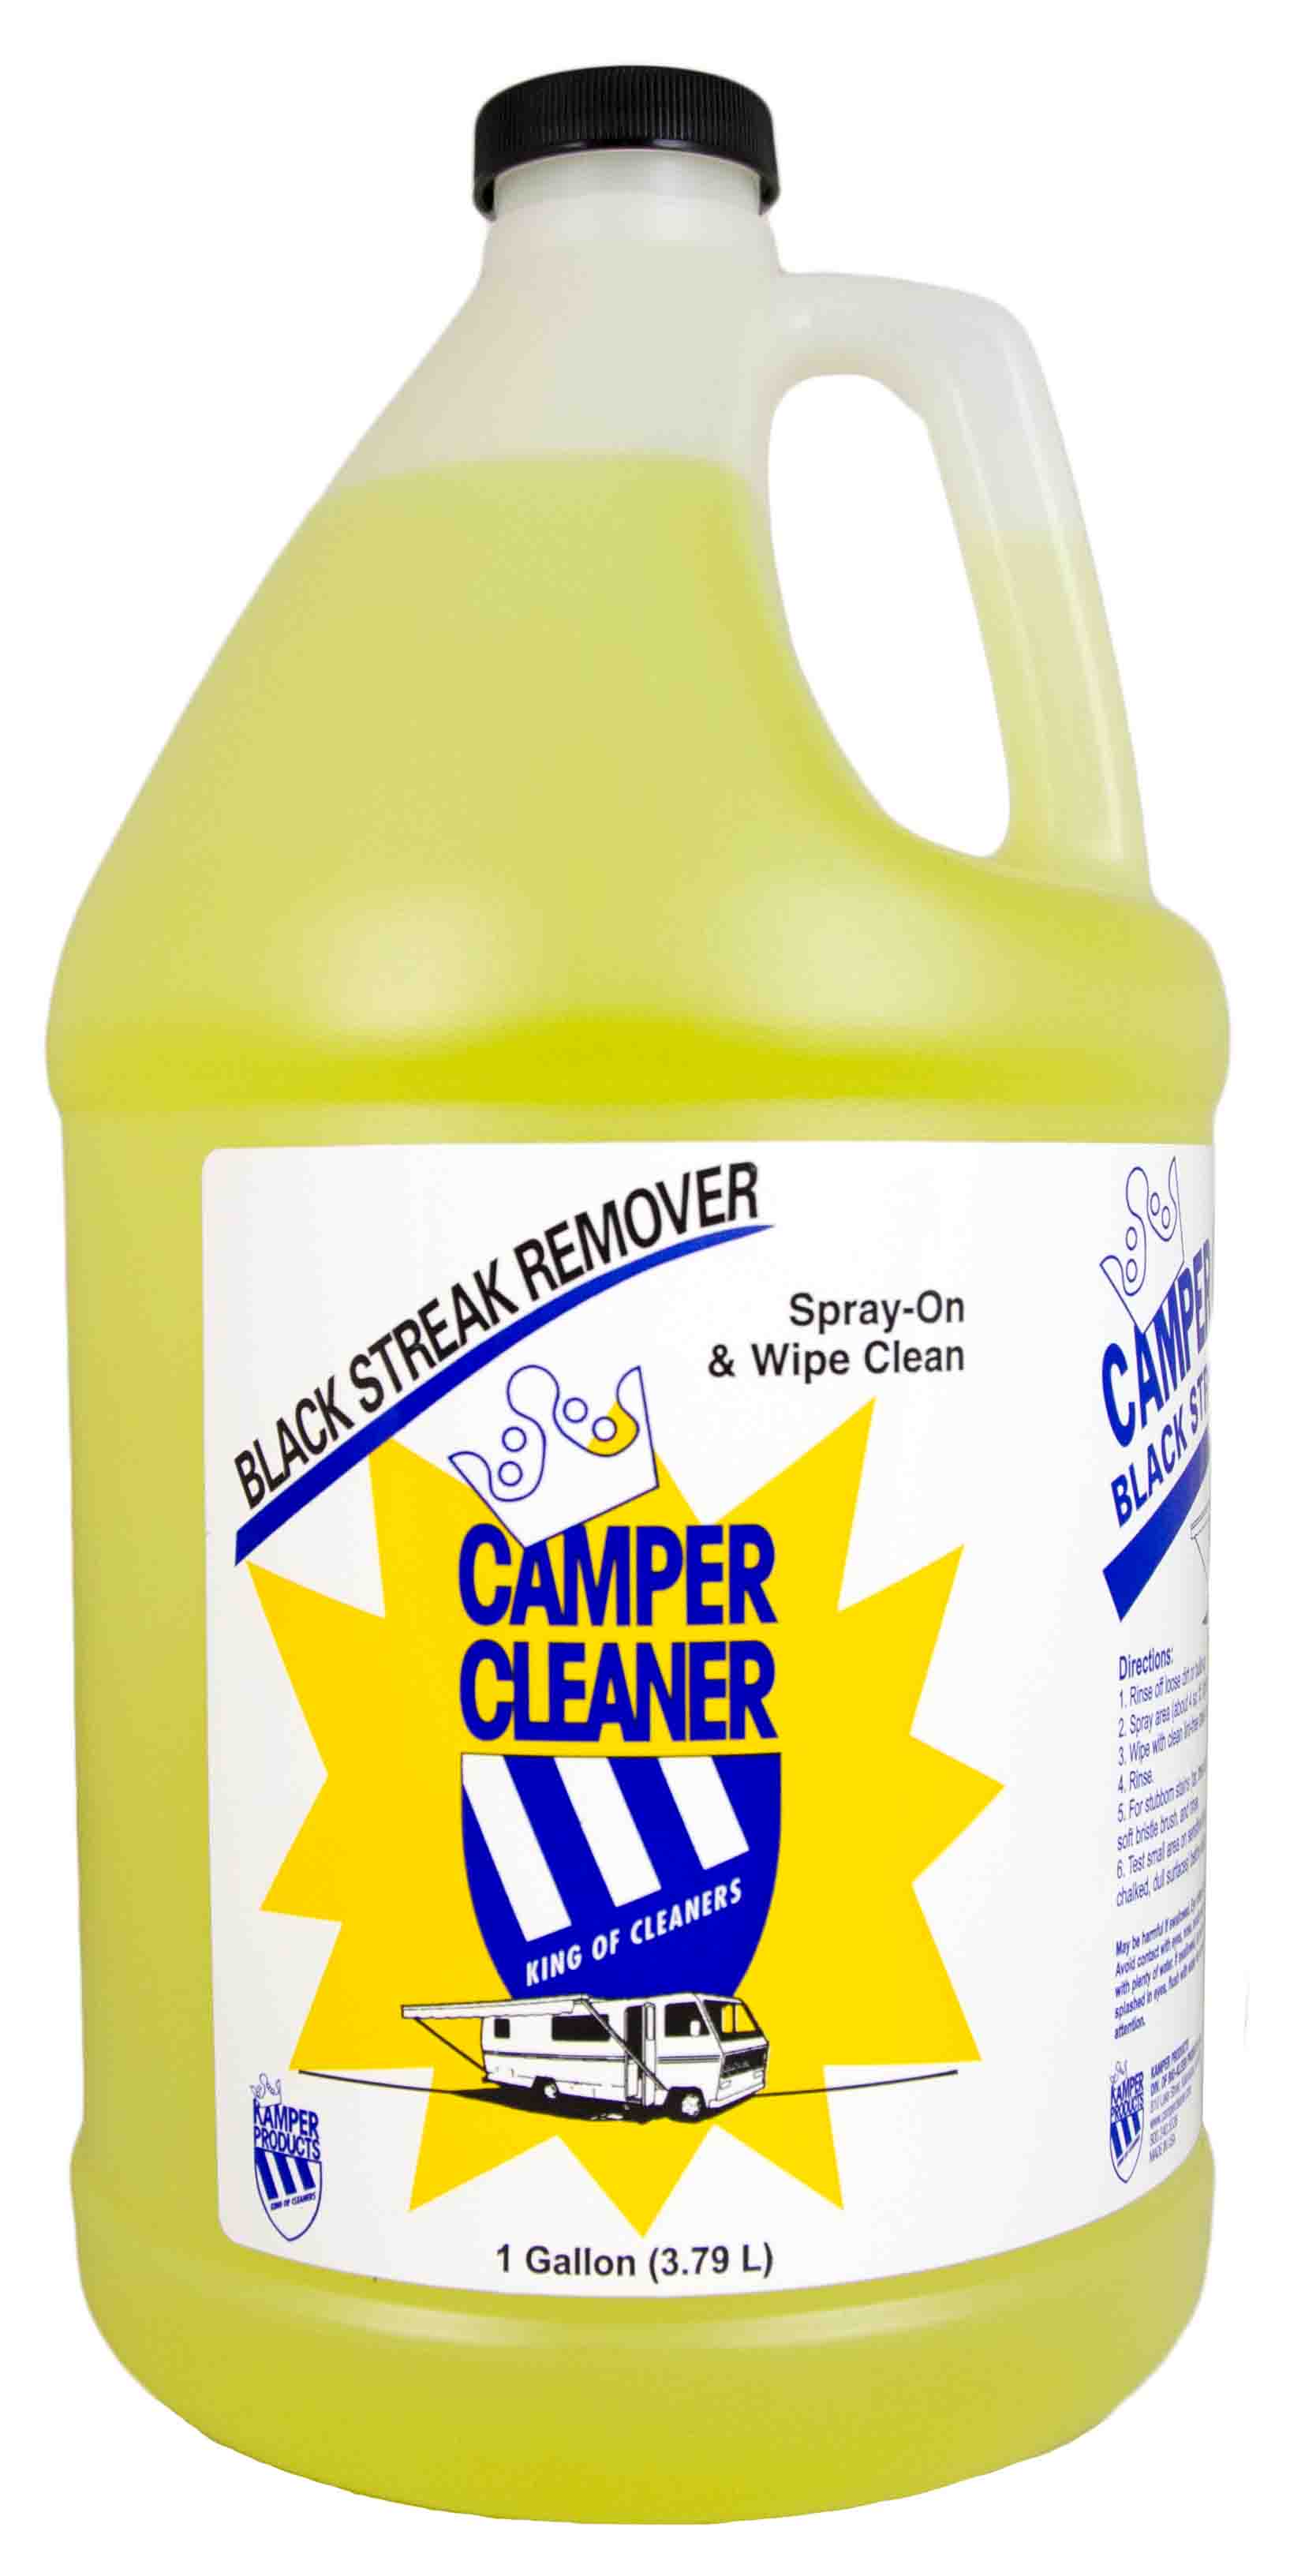 Bio-Kleen M10064 Camper Cleaner Black Streak Remover- 1 Gallon